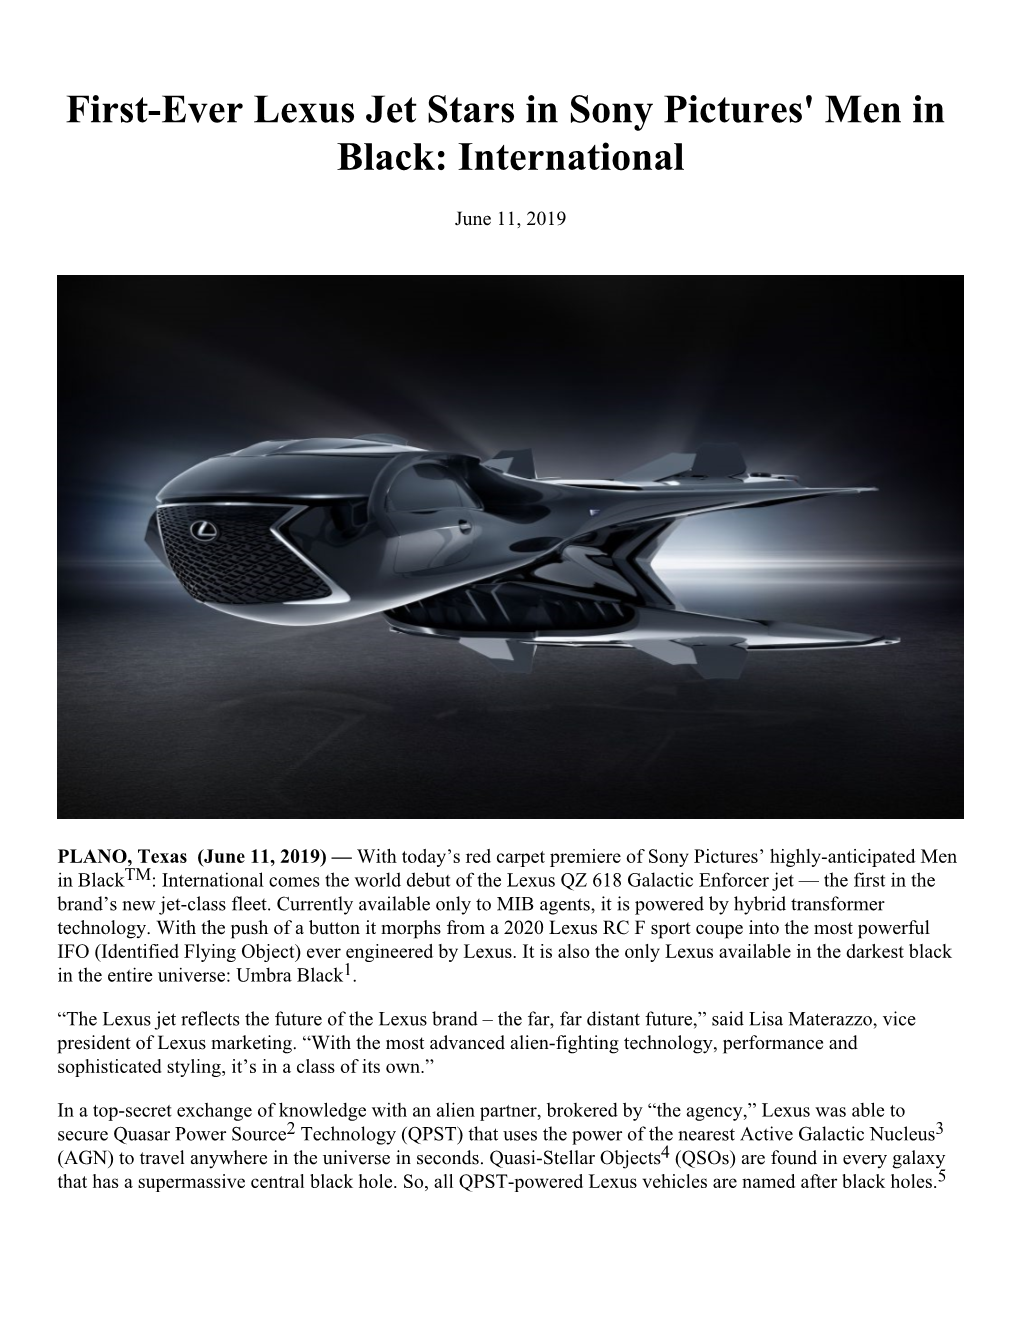 First-Ever Lexus Jet Stars in Sony Pictures' Men in Black: International